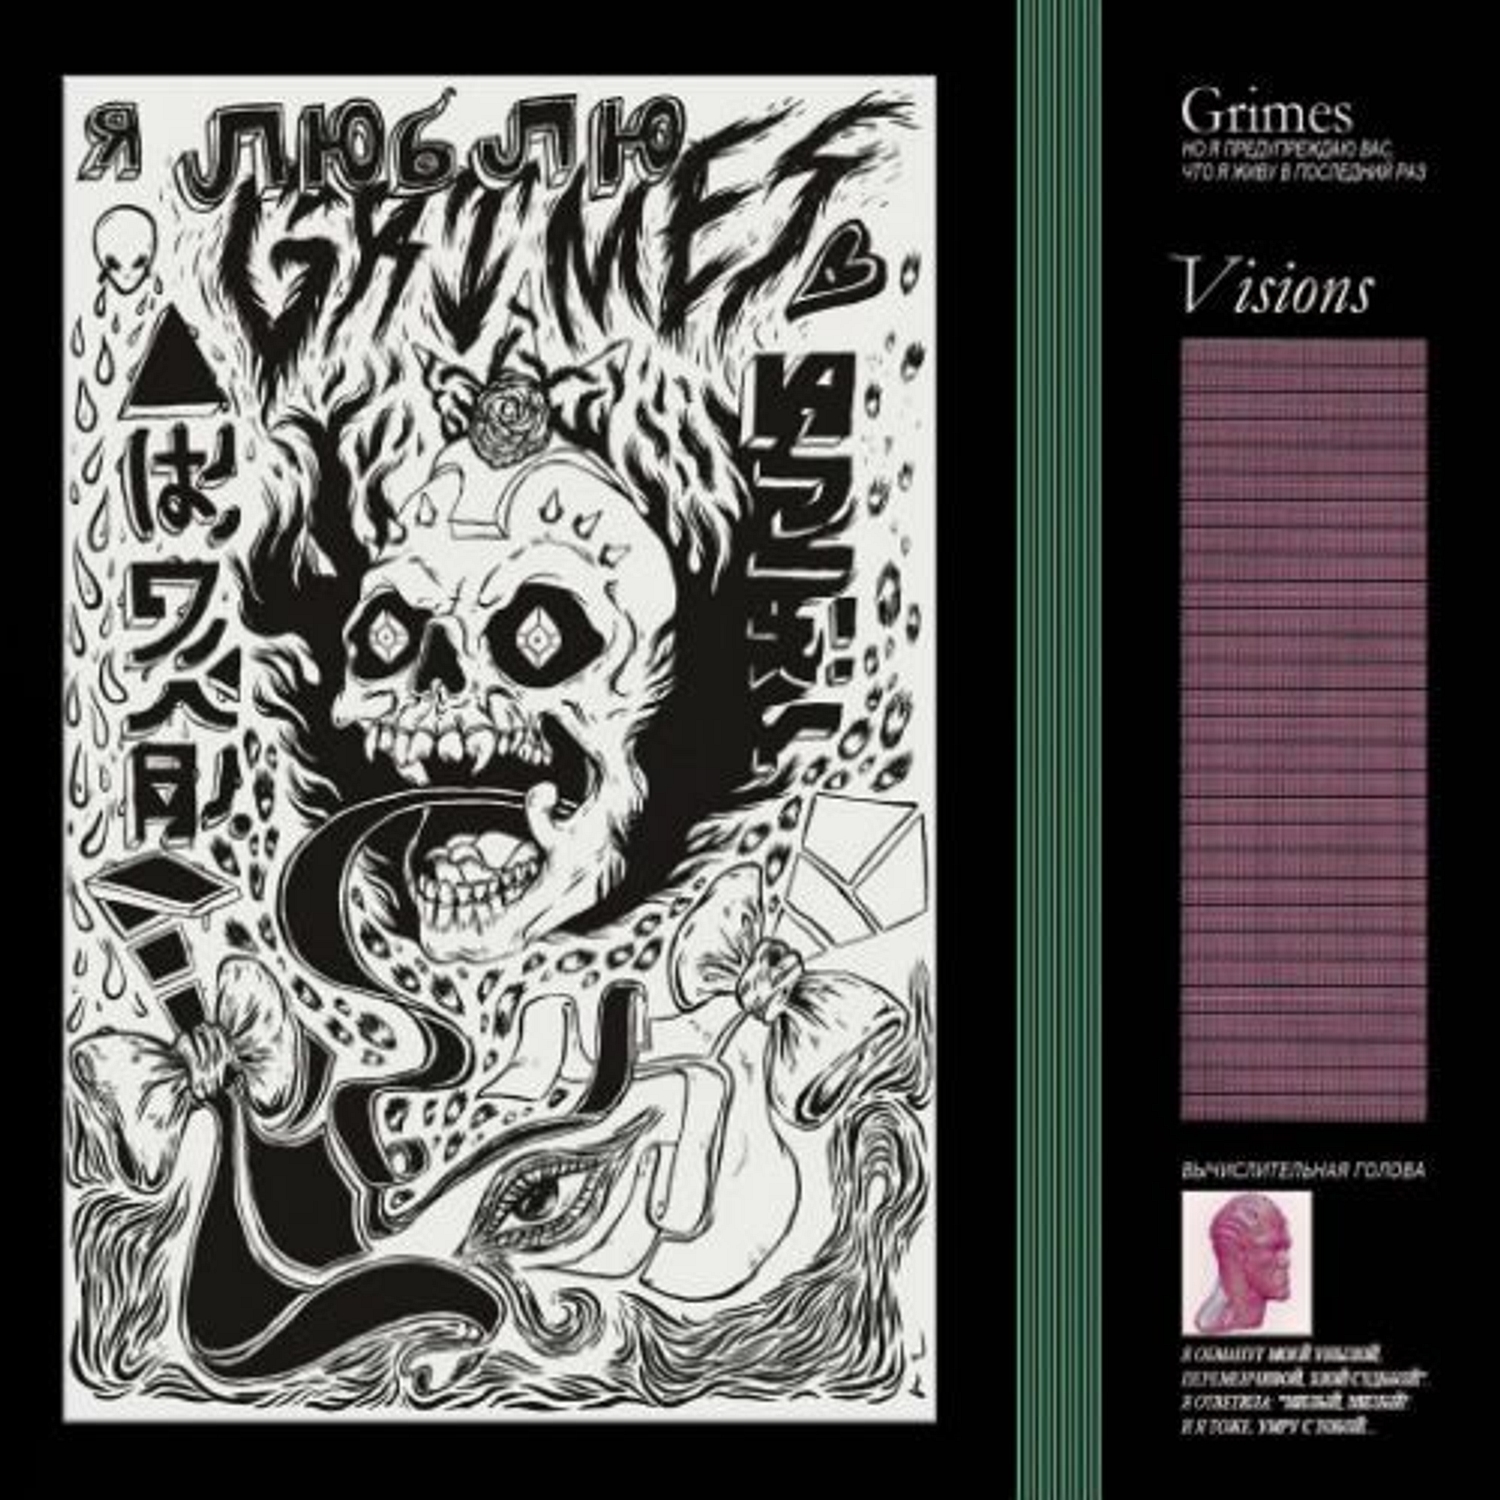 Genesis: the creative universe of Grimes